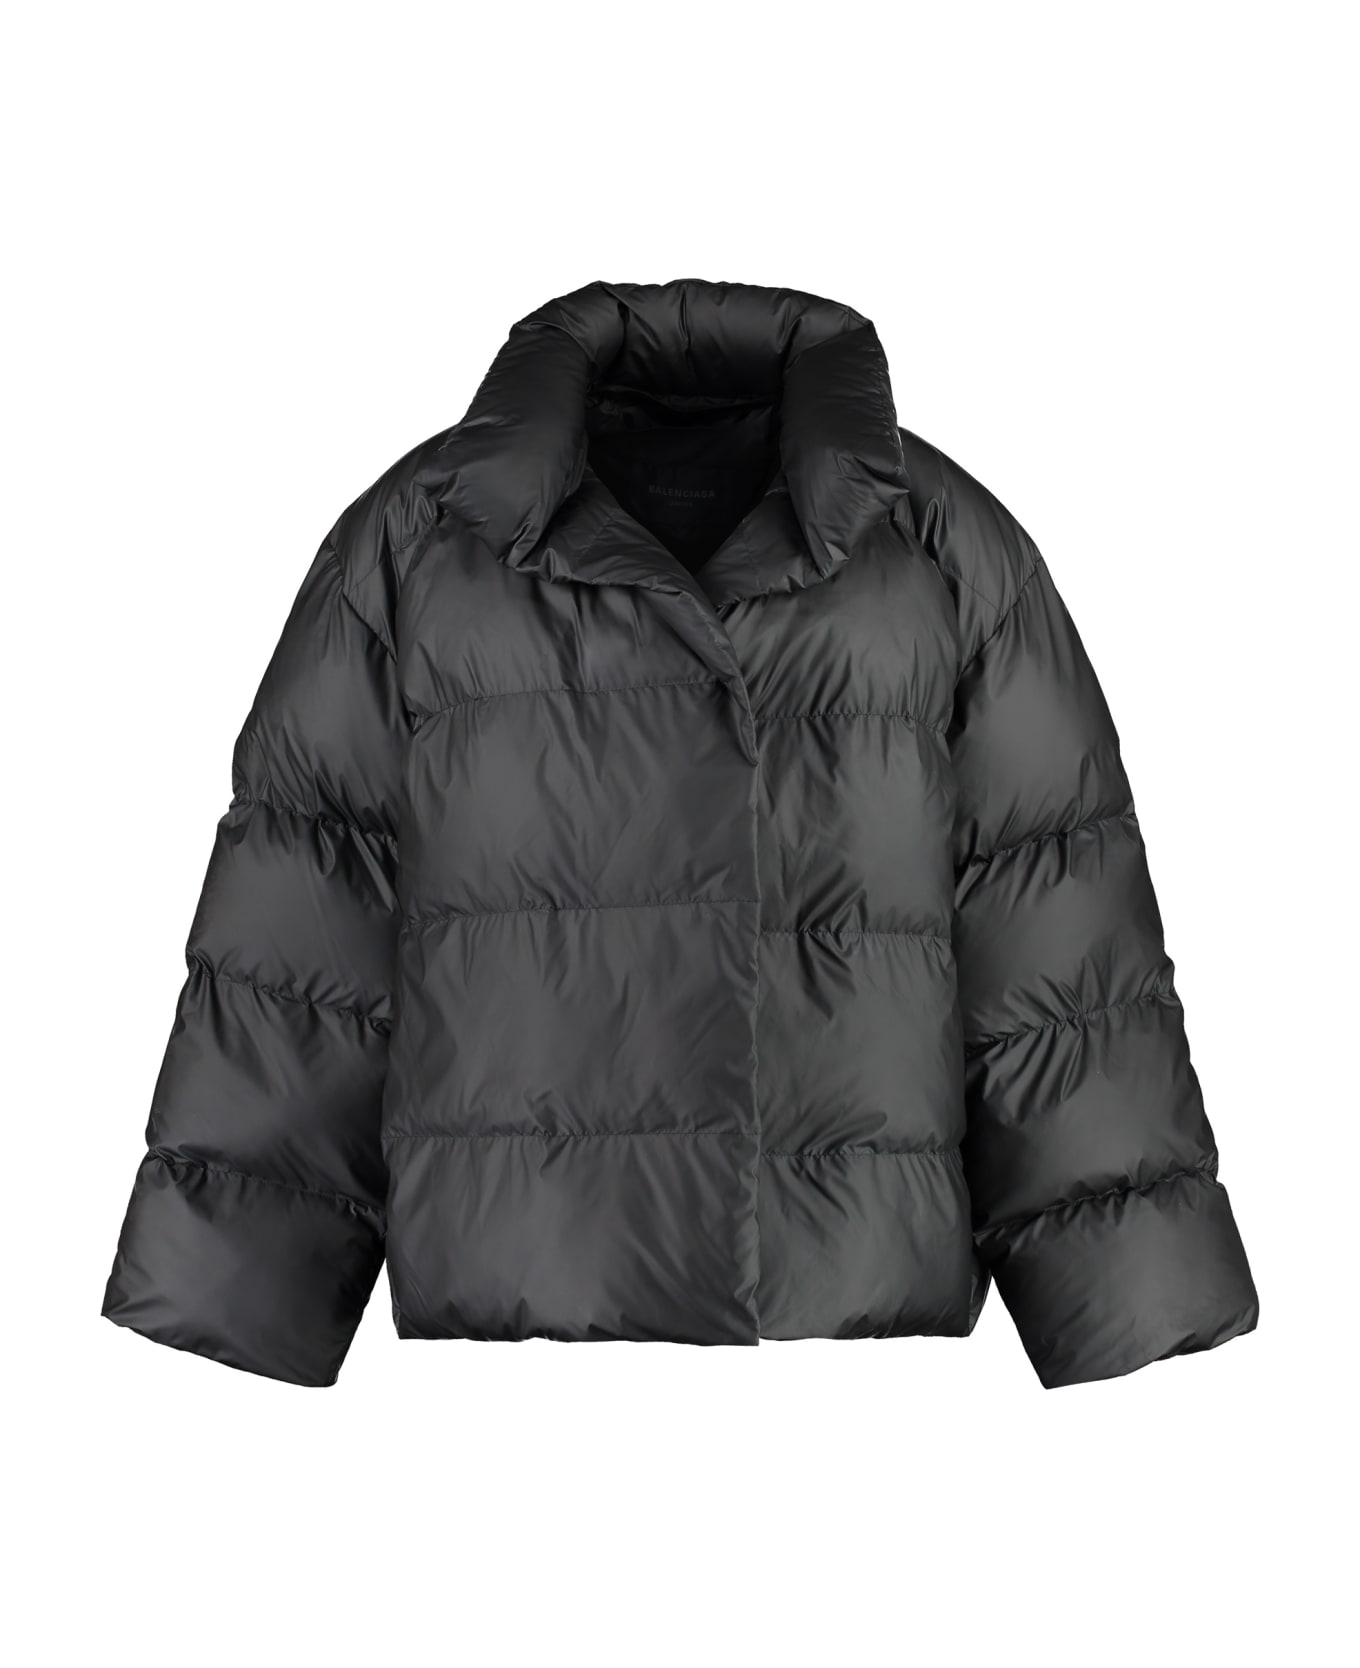 Balenciaga Wrap Oversize Puffer Jacket - Black